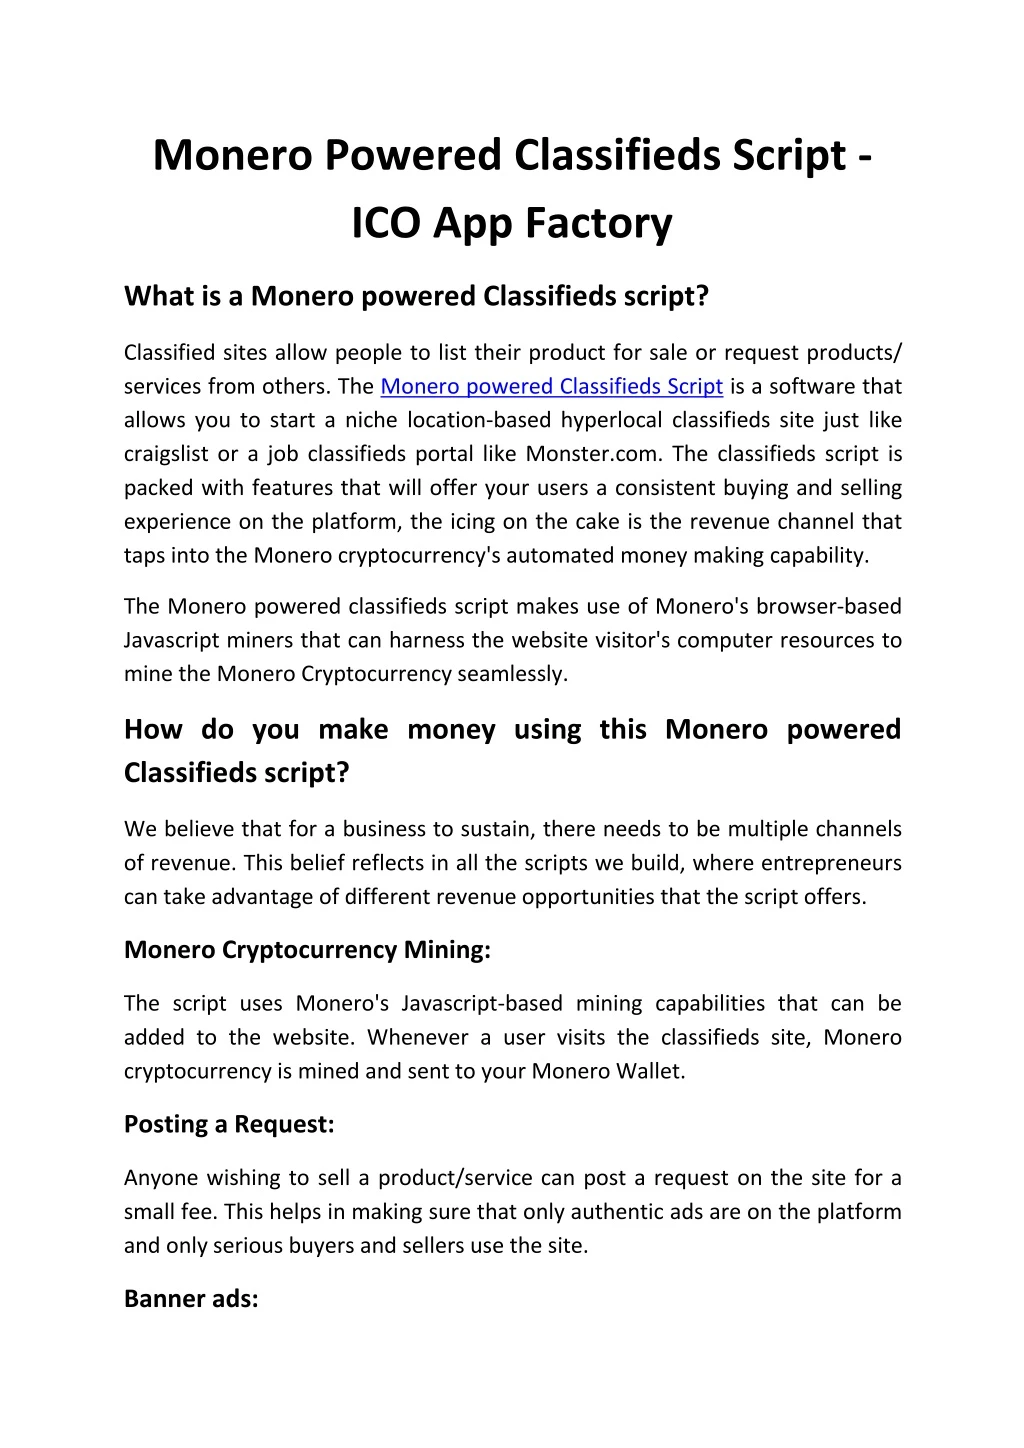 monero powered classifieds script ico app factory